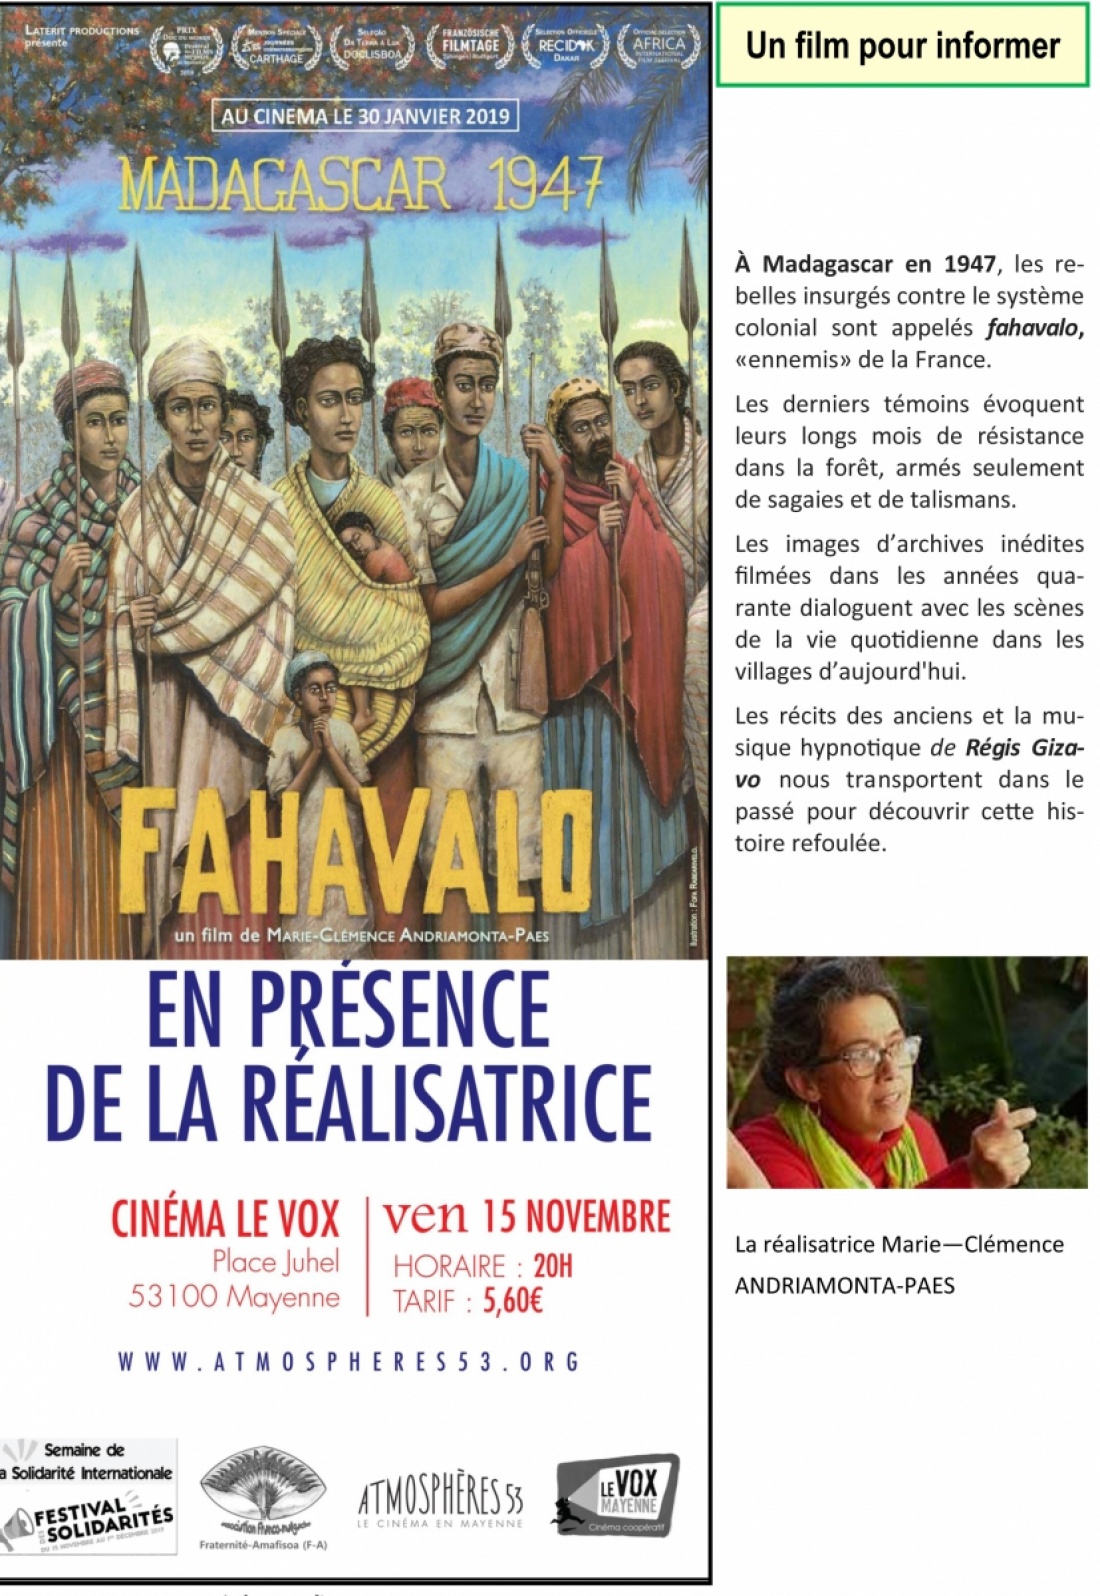 FAHAVALO film documentaire de Marie-Clémens PAES